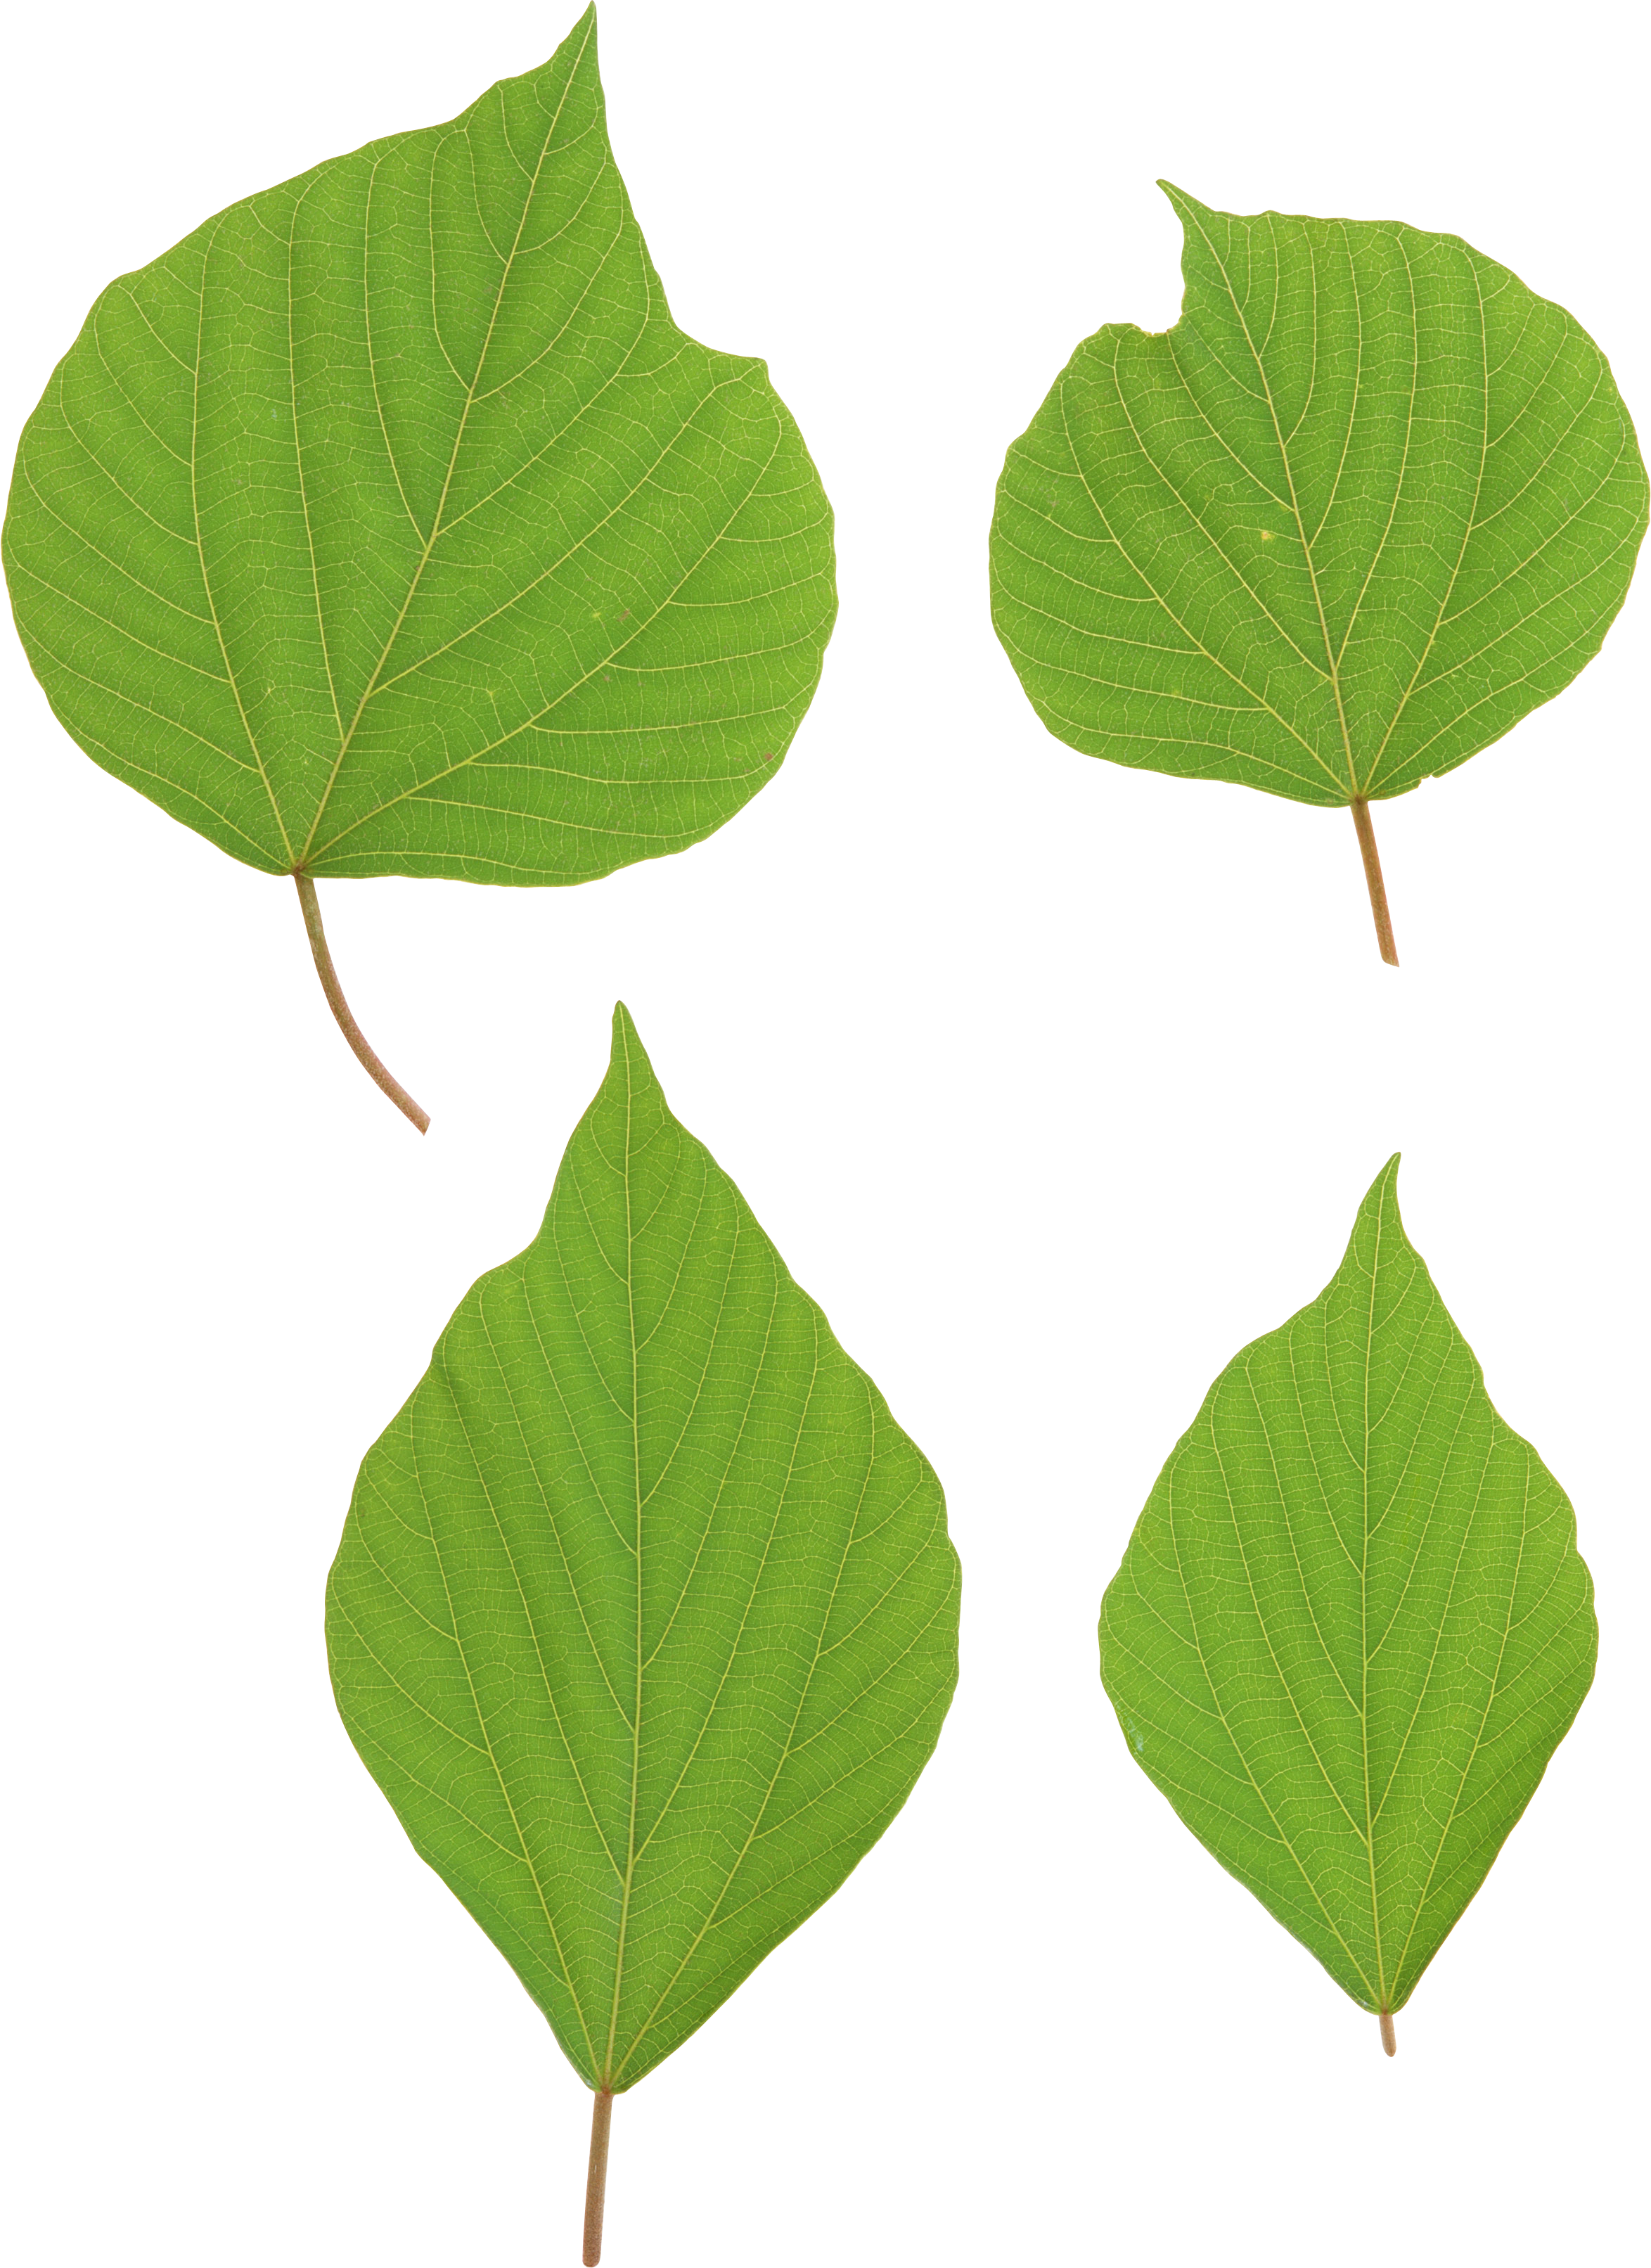 Green Leaves Png Image - Leaf (2348x3225)